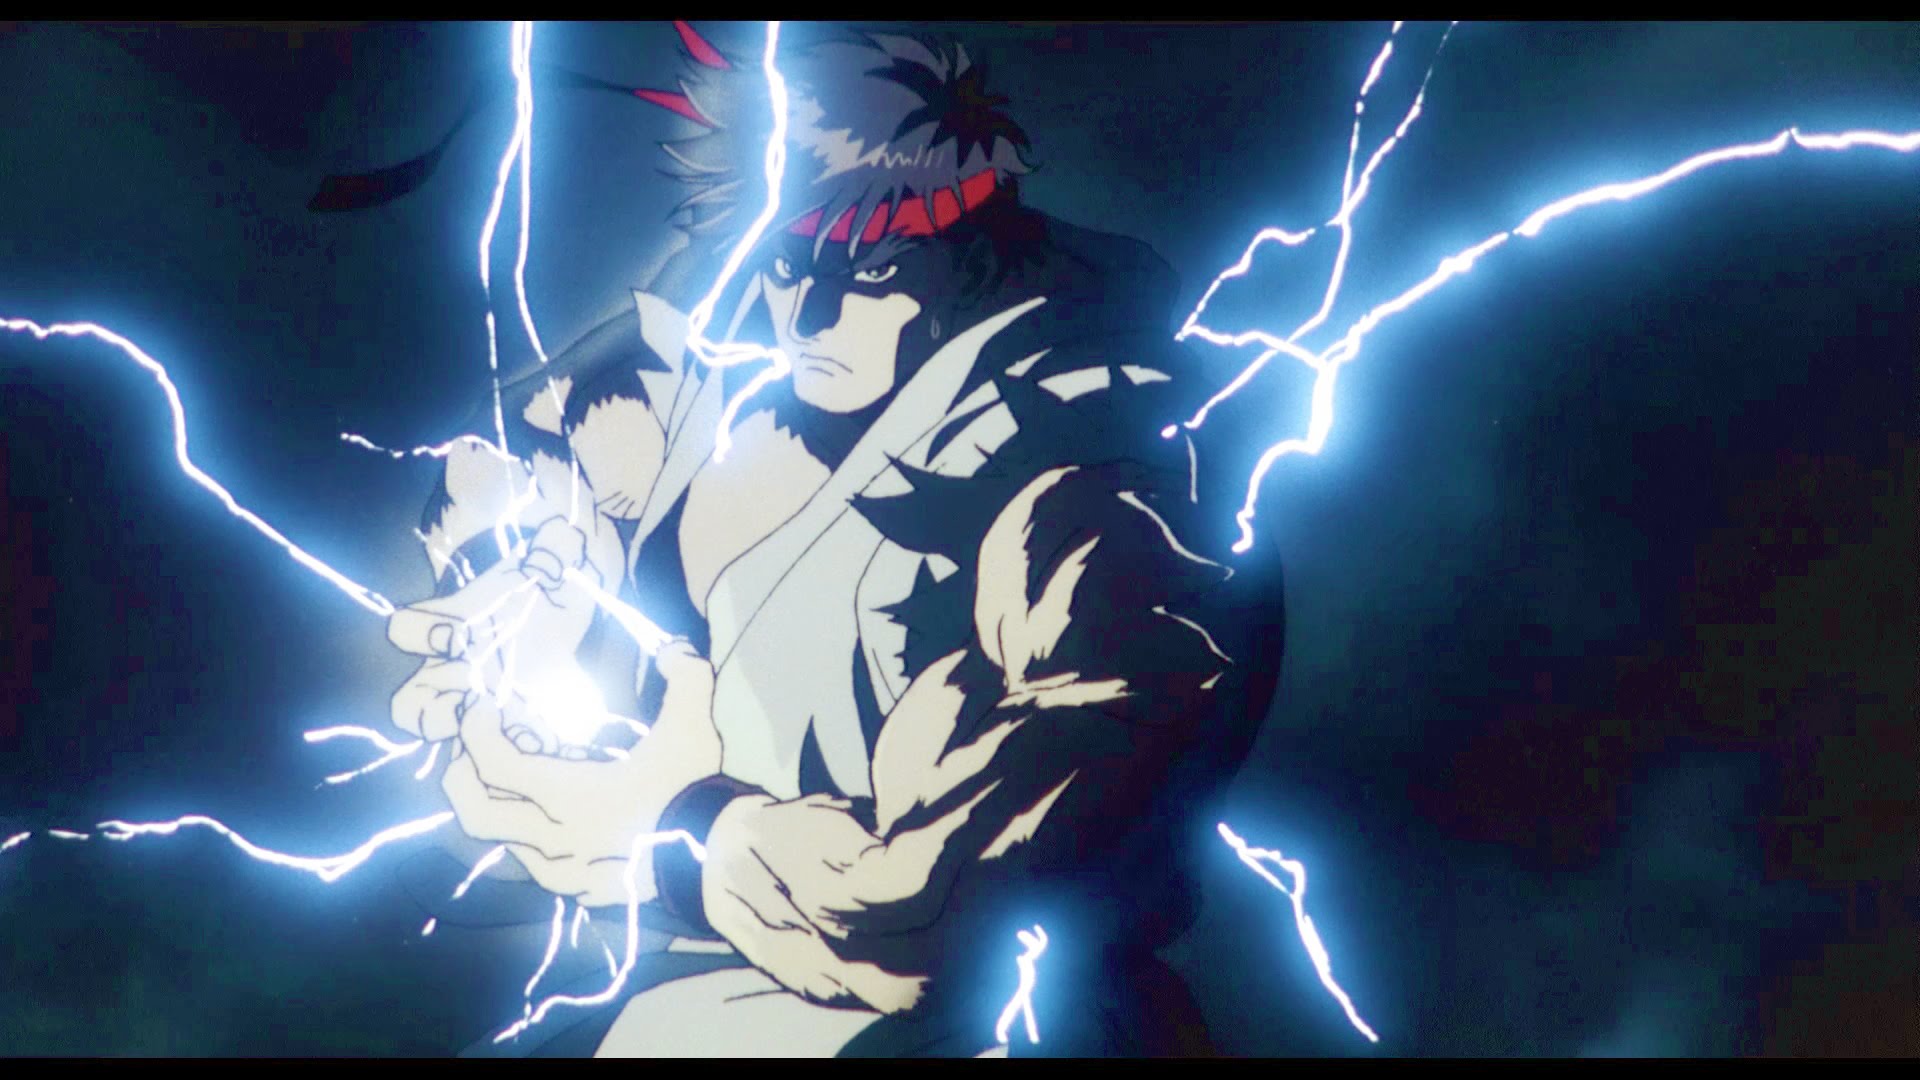 fondo de pantalla de ryu street fighter,relámpago,cg artwork,anime,personaje de ficción,cielo